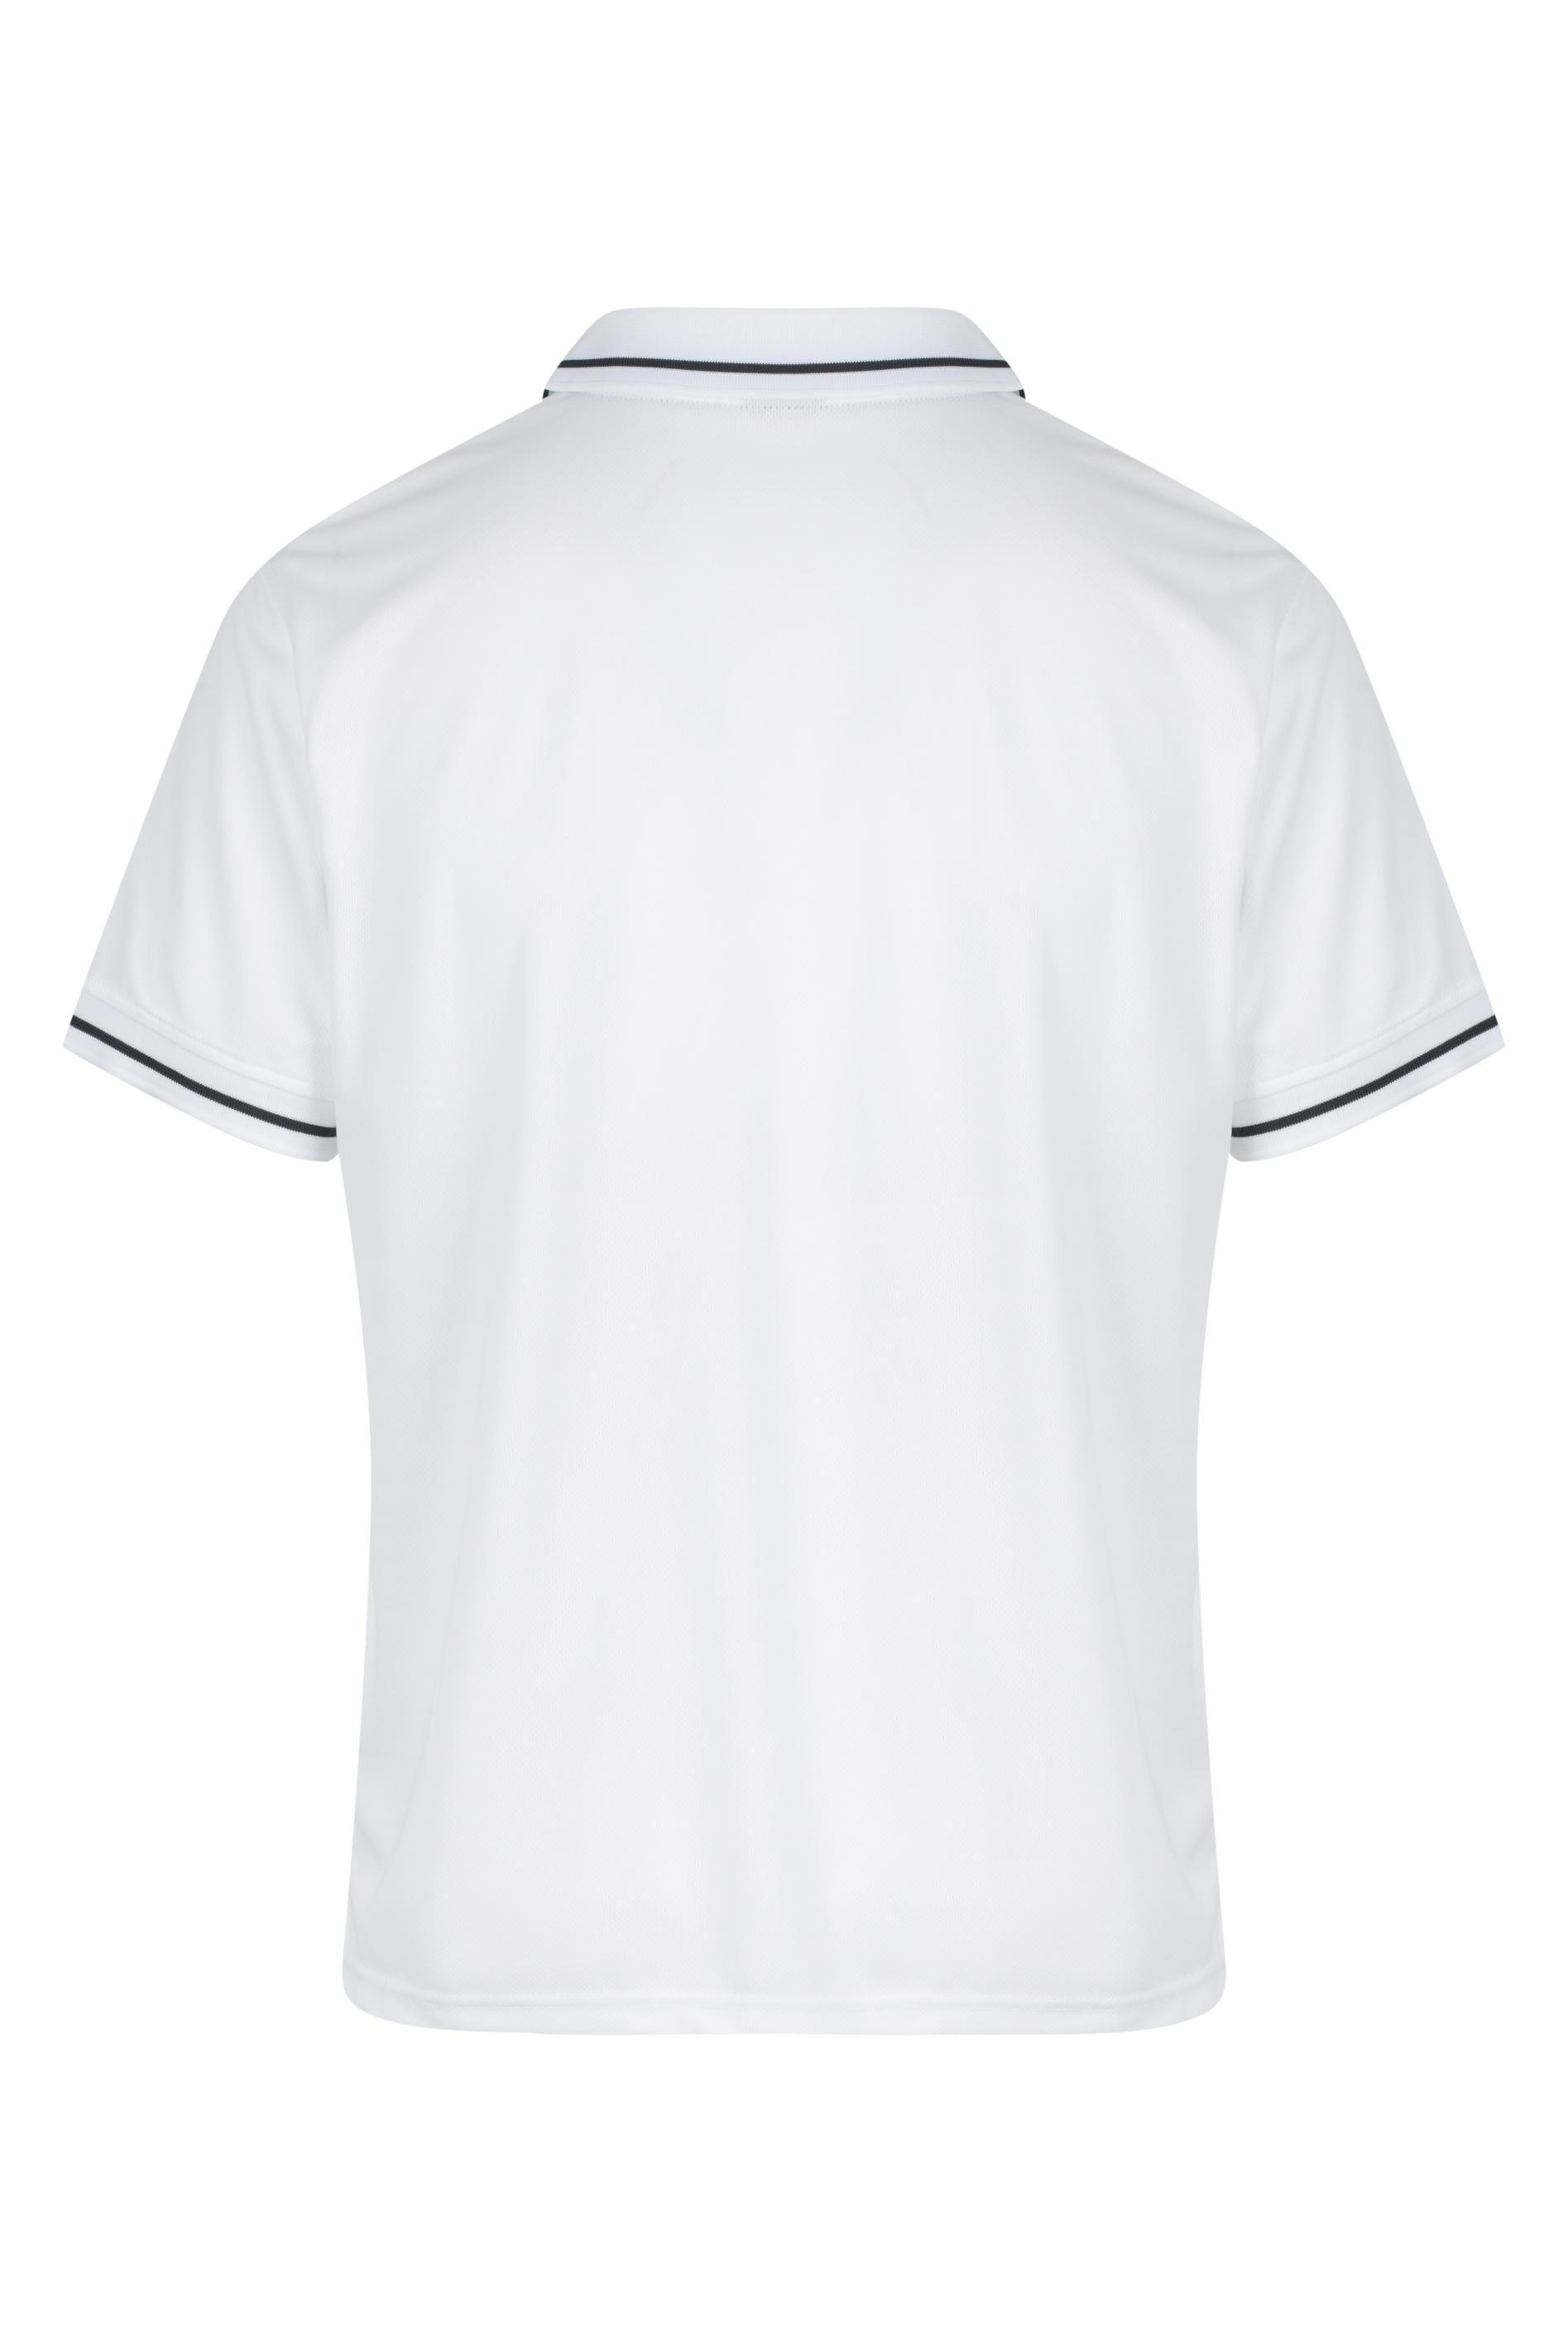 Cottesloe Mens Polos | Custom Polo Shirts 🔥 Safe-T-Rex Workwear